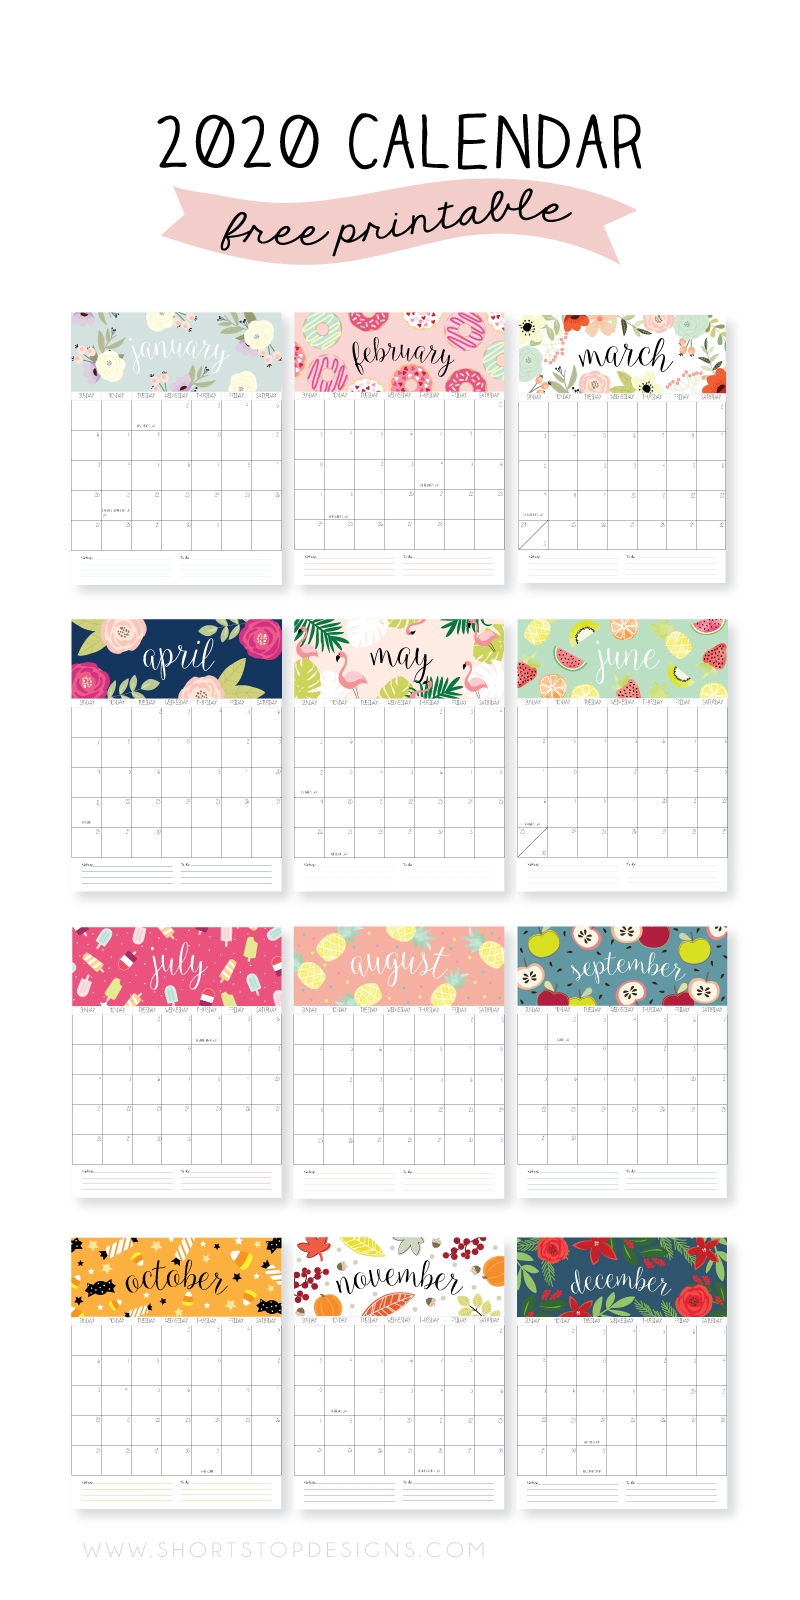 2020 Printable Calendar – Short Stop Designs Blank Calendar 2020 Monthly Portrait